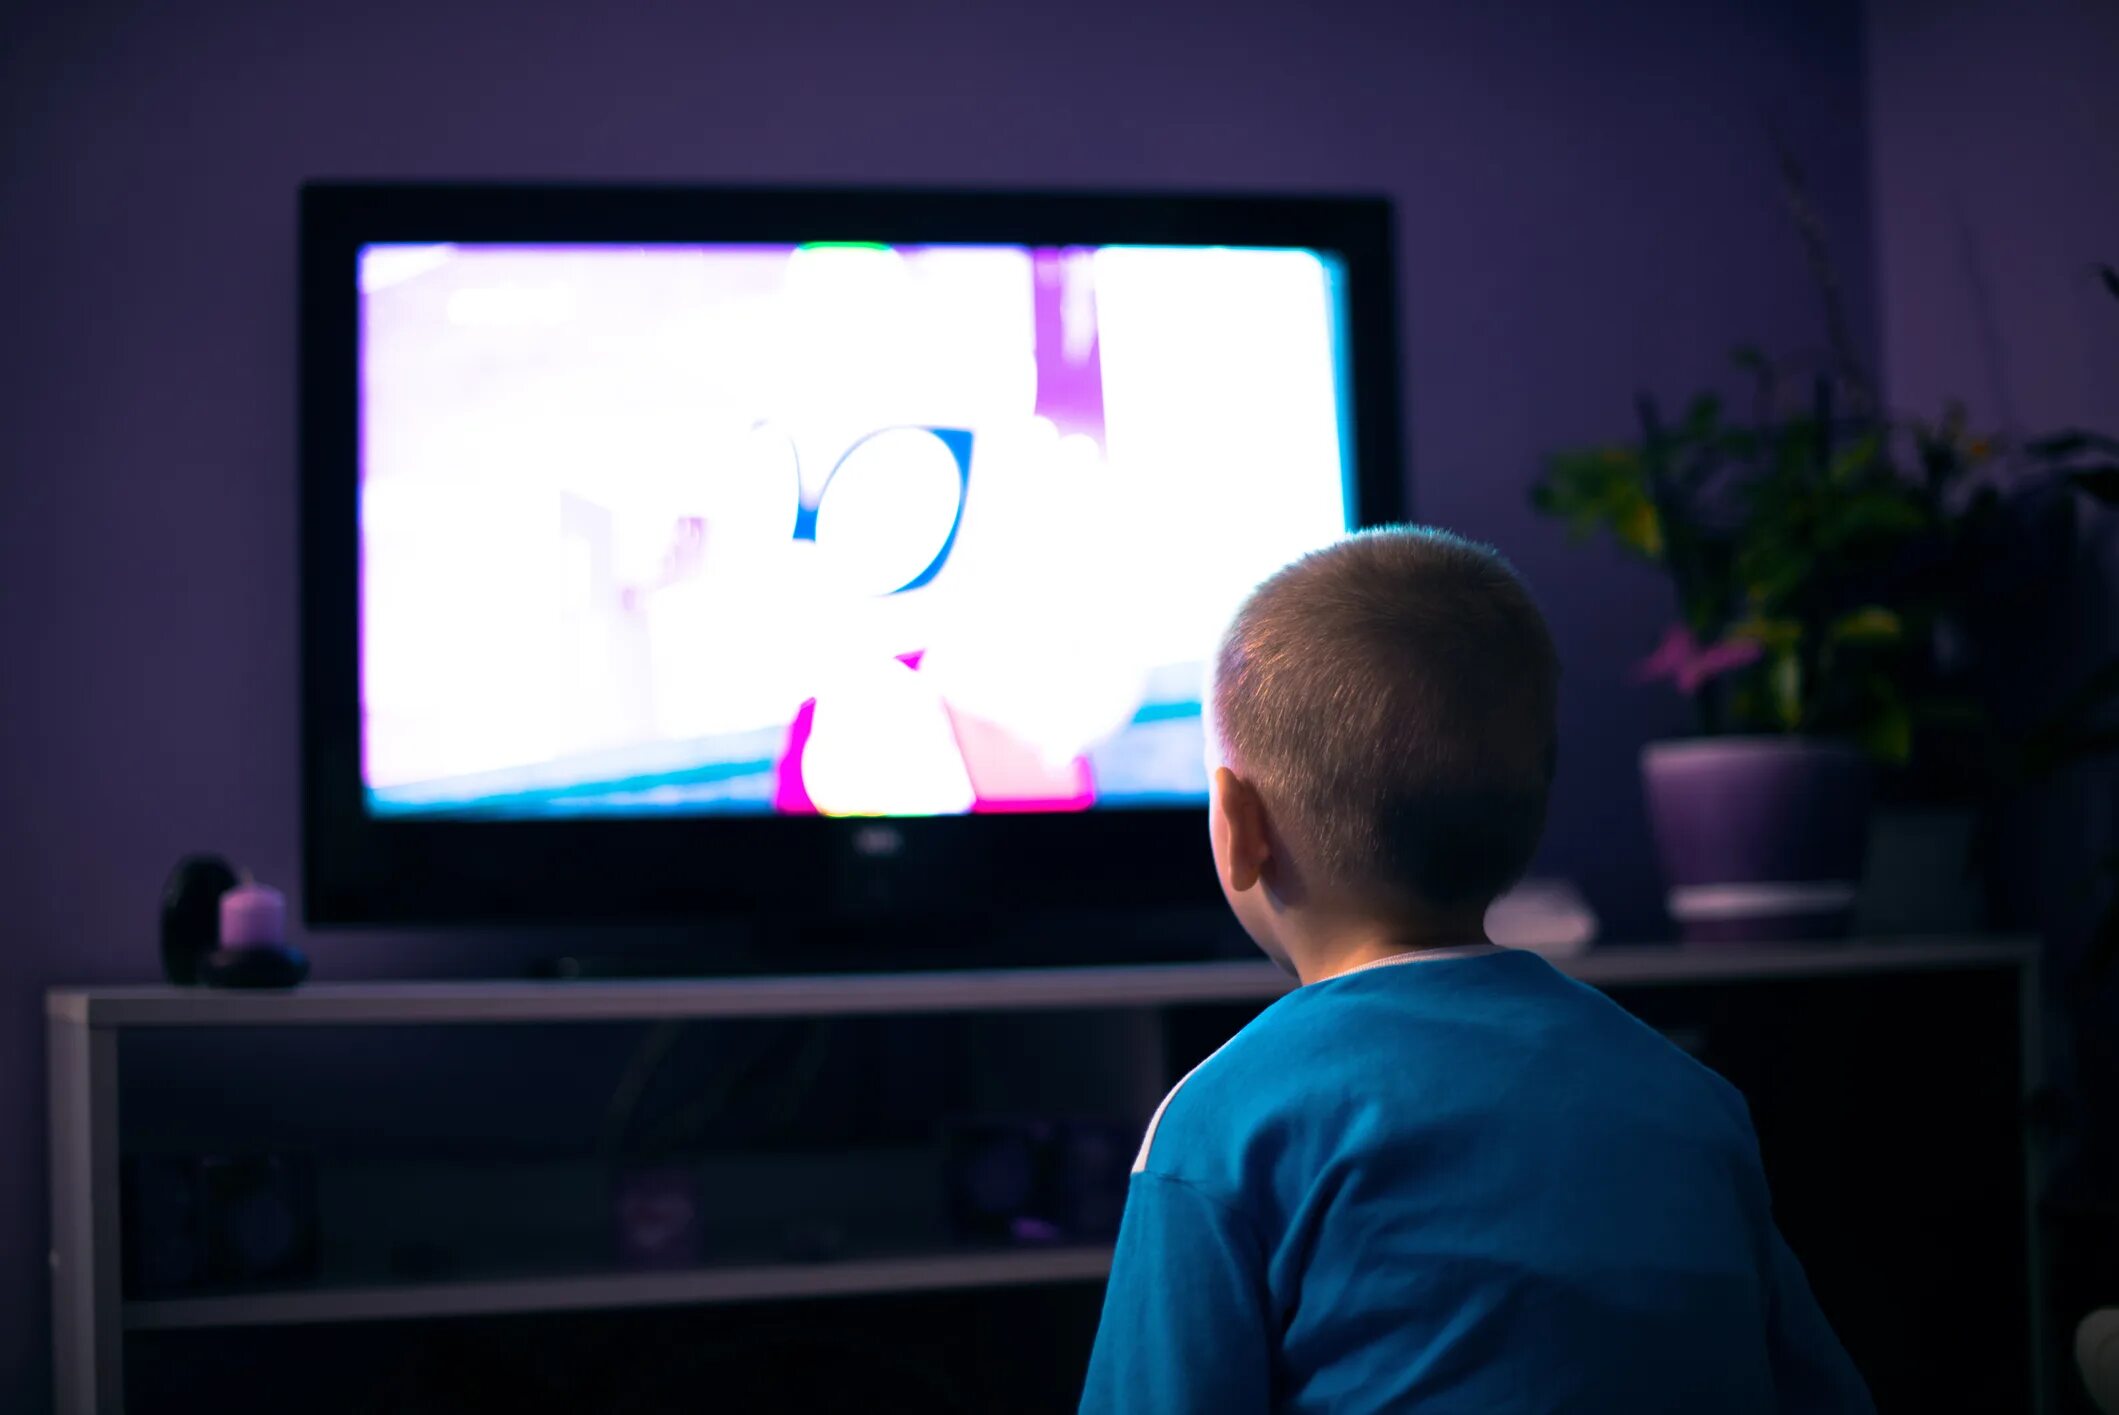 Включи свет мальчик. Мальчик у телевизора. Телевизор в темноте. Школьник у телевизора. Телевизор для детей.